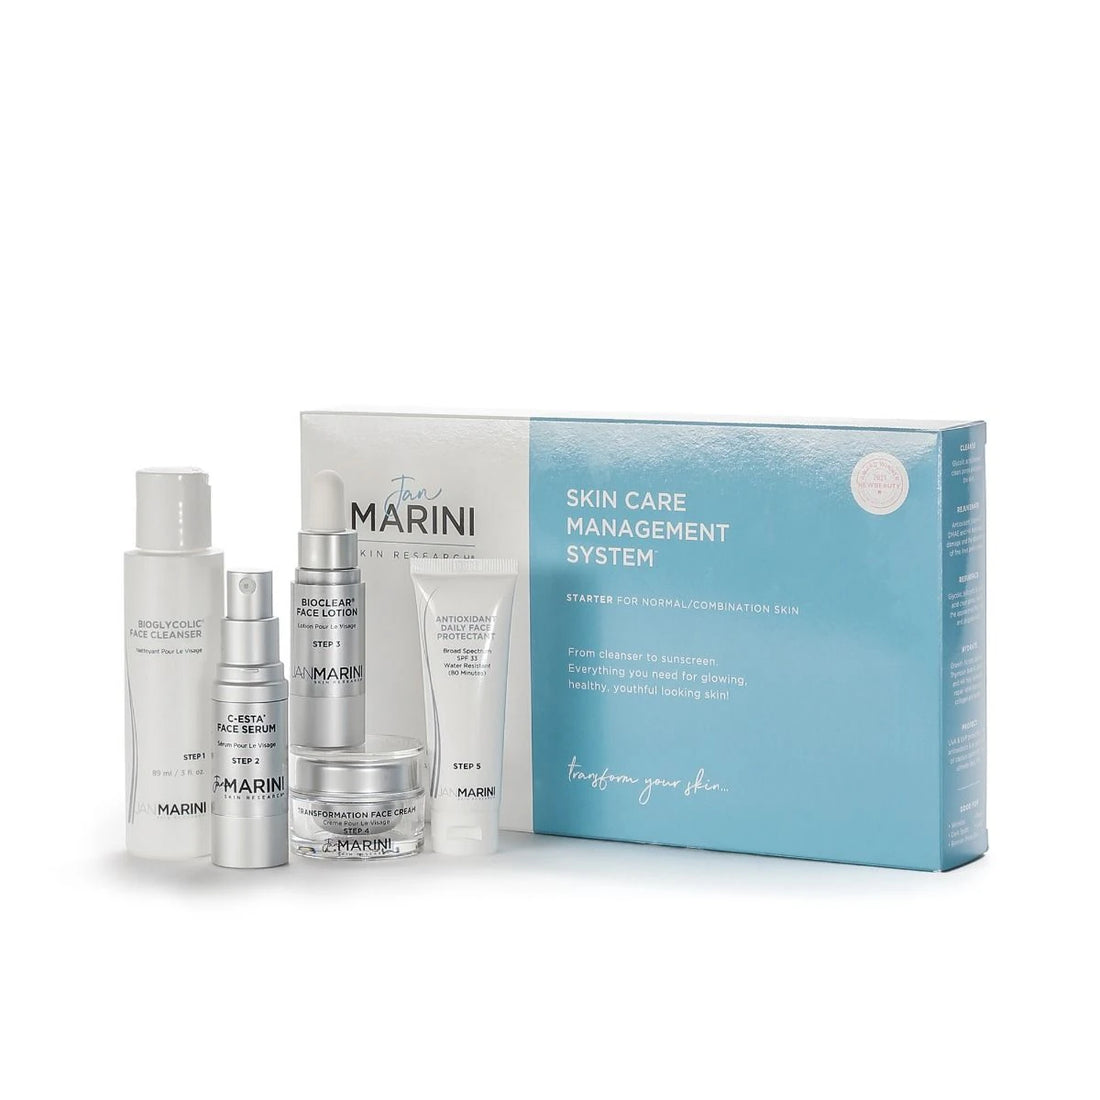 Jan Marini Starter Skin Care Management System: Bioglycolic Facial Cleanser 89 ml + C-ESTA Facial Serum 30 ml + Bioclear Facial Lotion 30 ml + Transforming Facial Cream 28 g + Daily Facial Protective Antioxidant 57 g